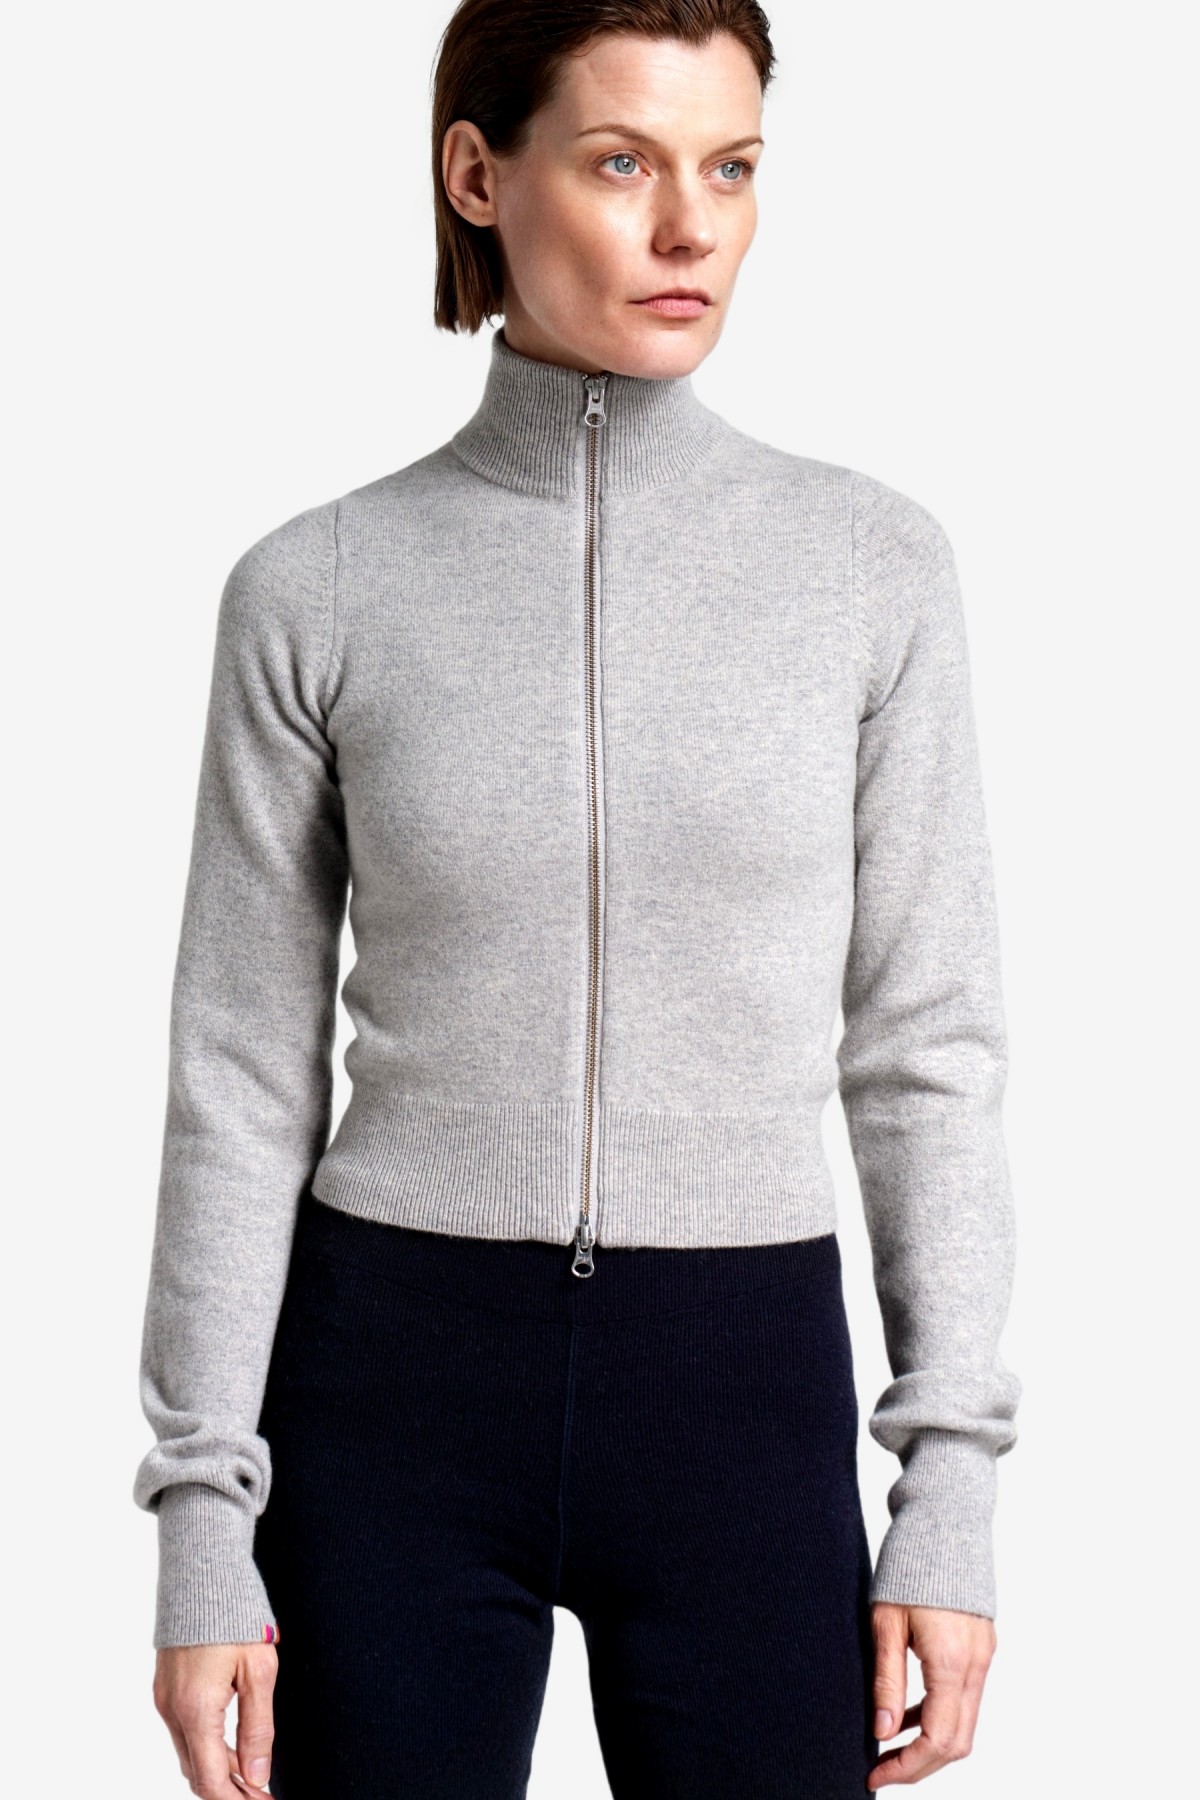 Extreme Cashmere N302 Lemon Zip Sweater